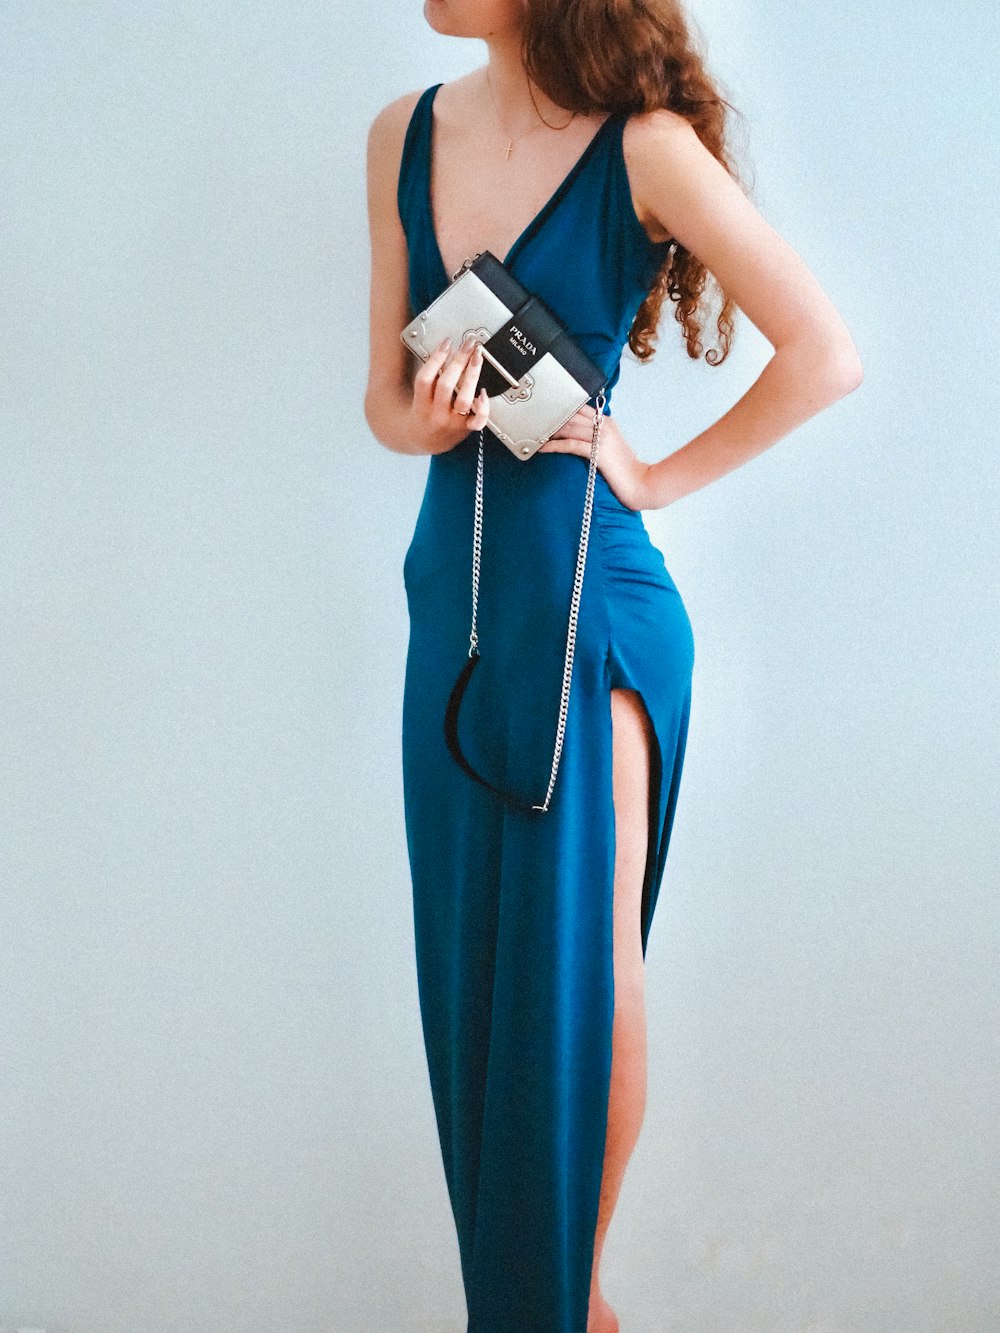 woman in blue sleeveless dress